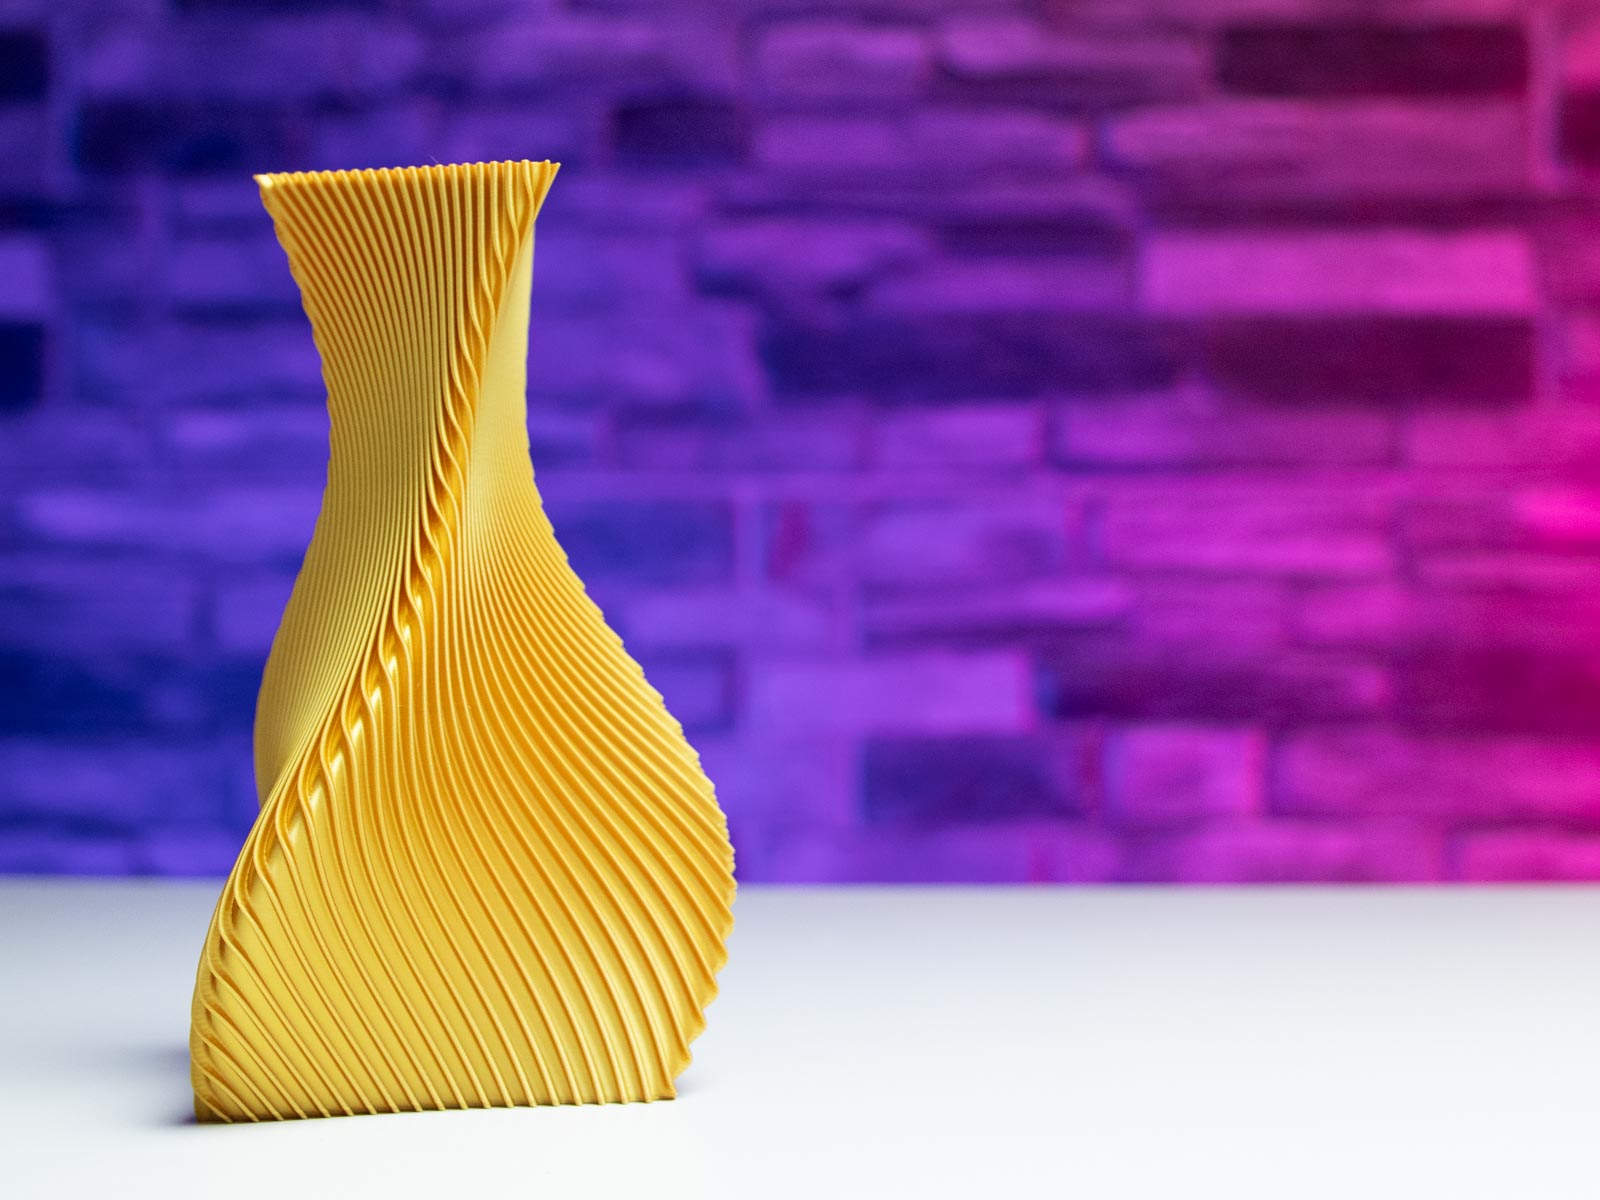 3D Printed Spiral Vase AMY